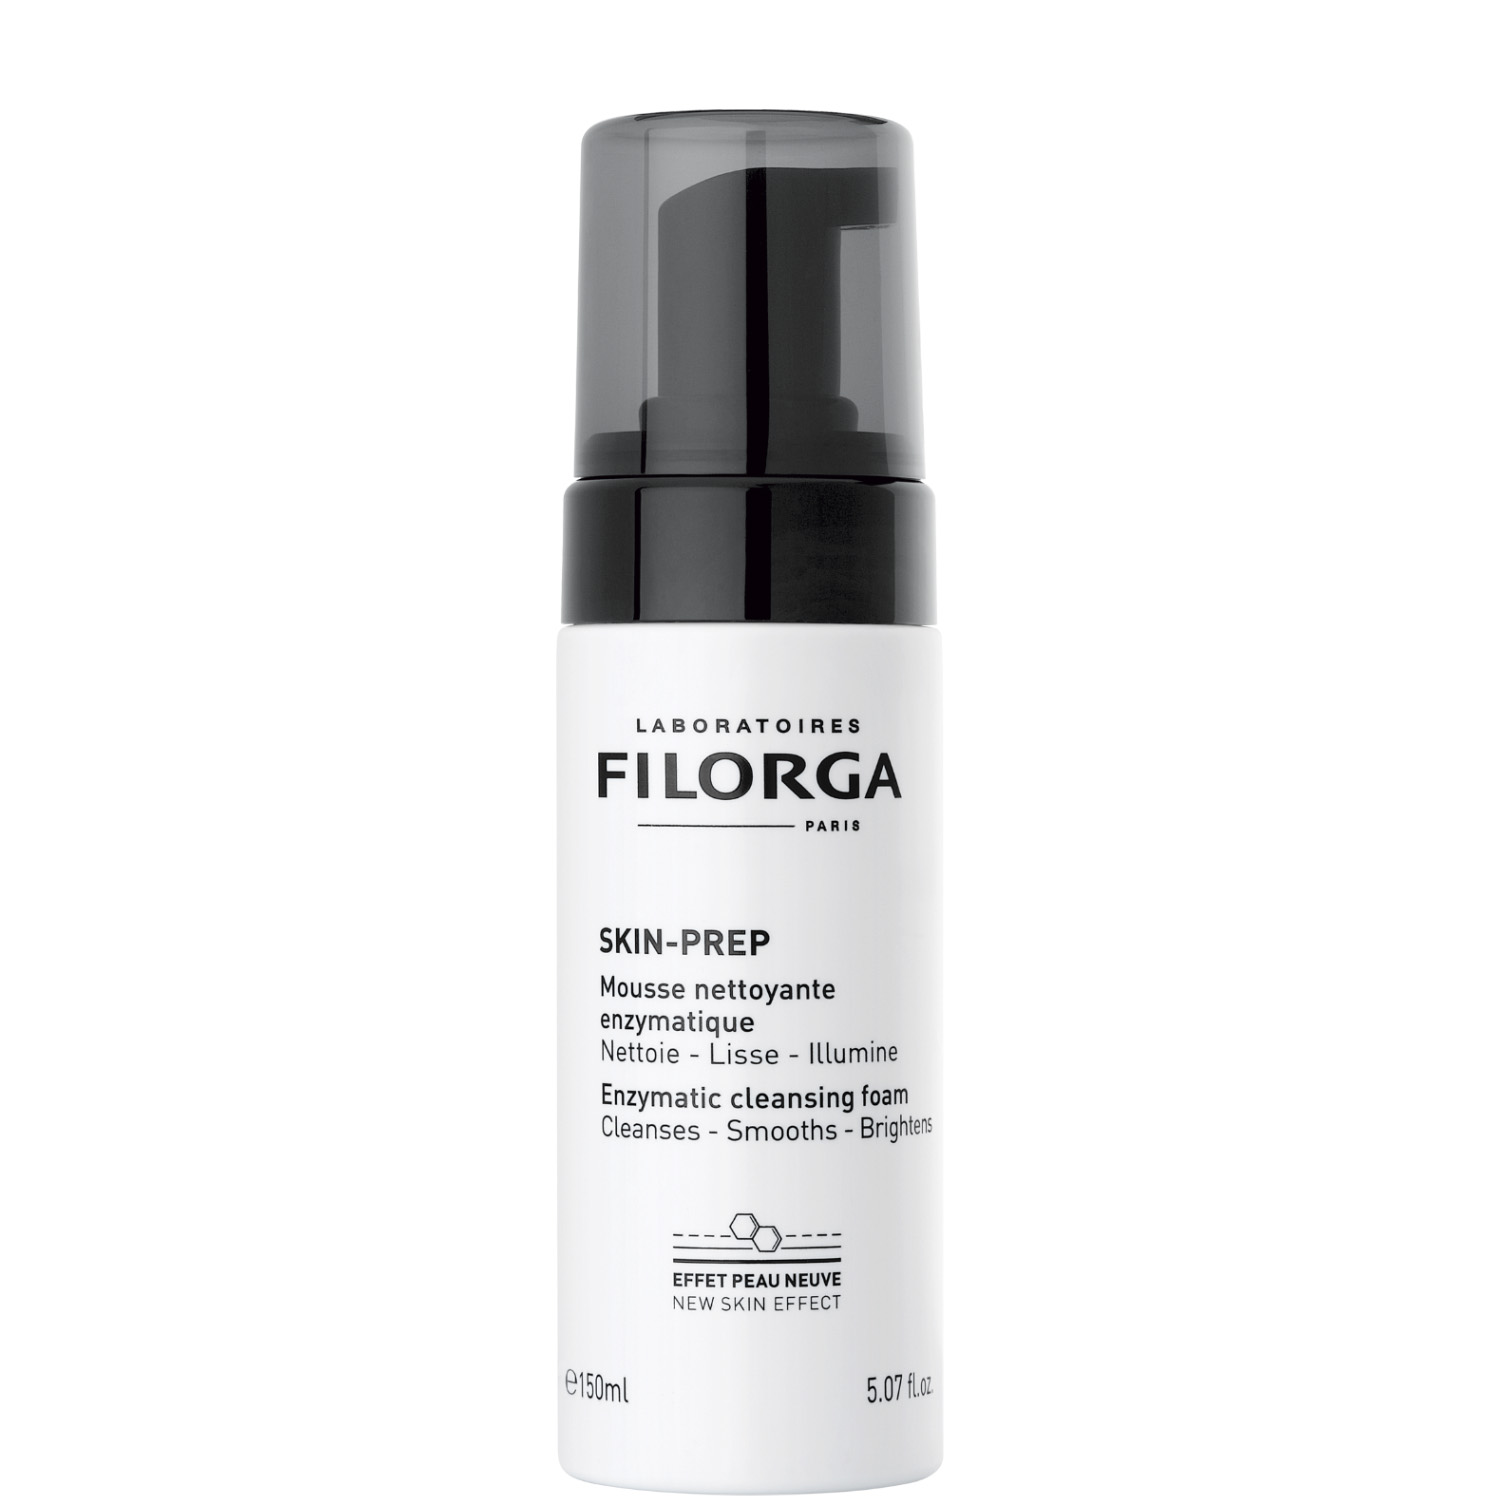 Filorga Skin-Prep Enzymatic Cleansing Foam 150ml